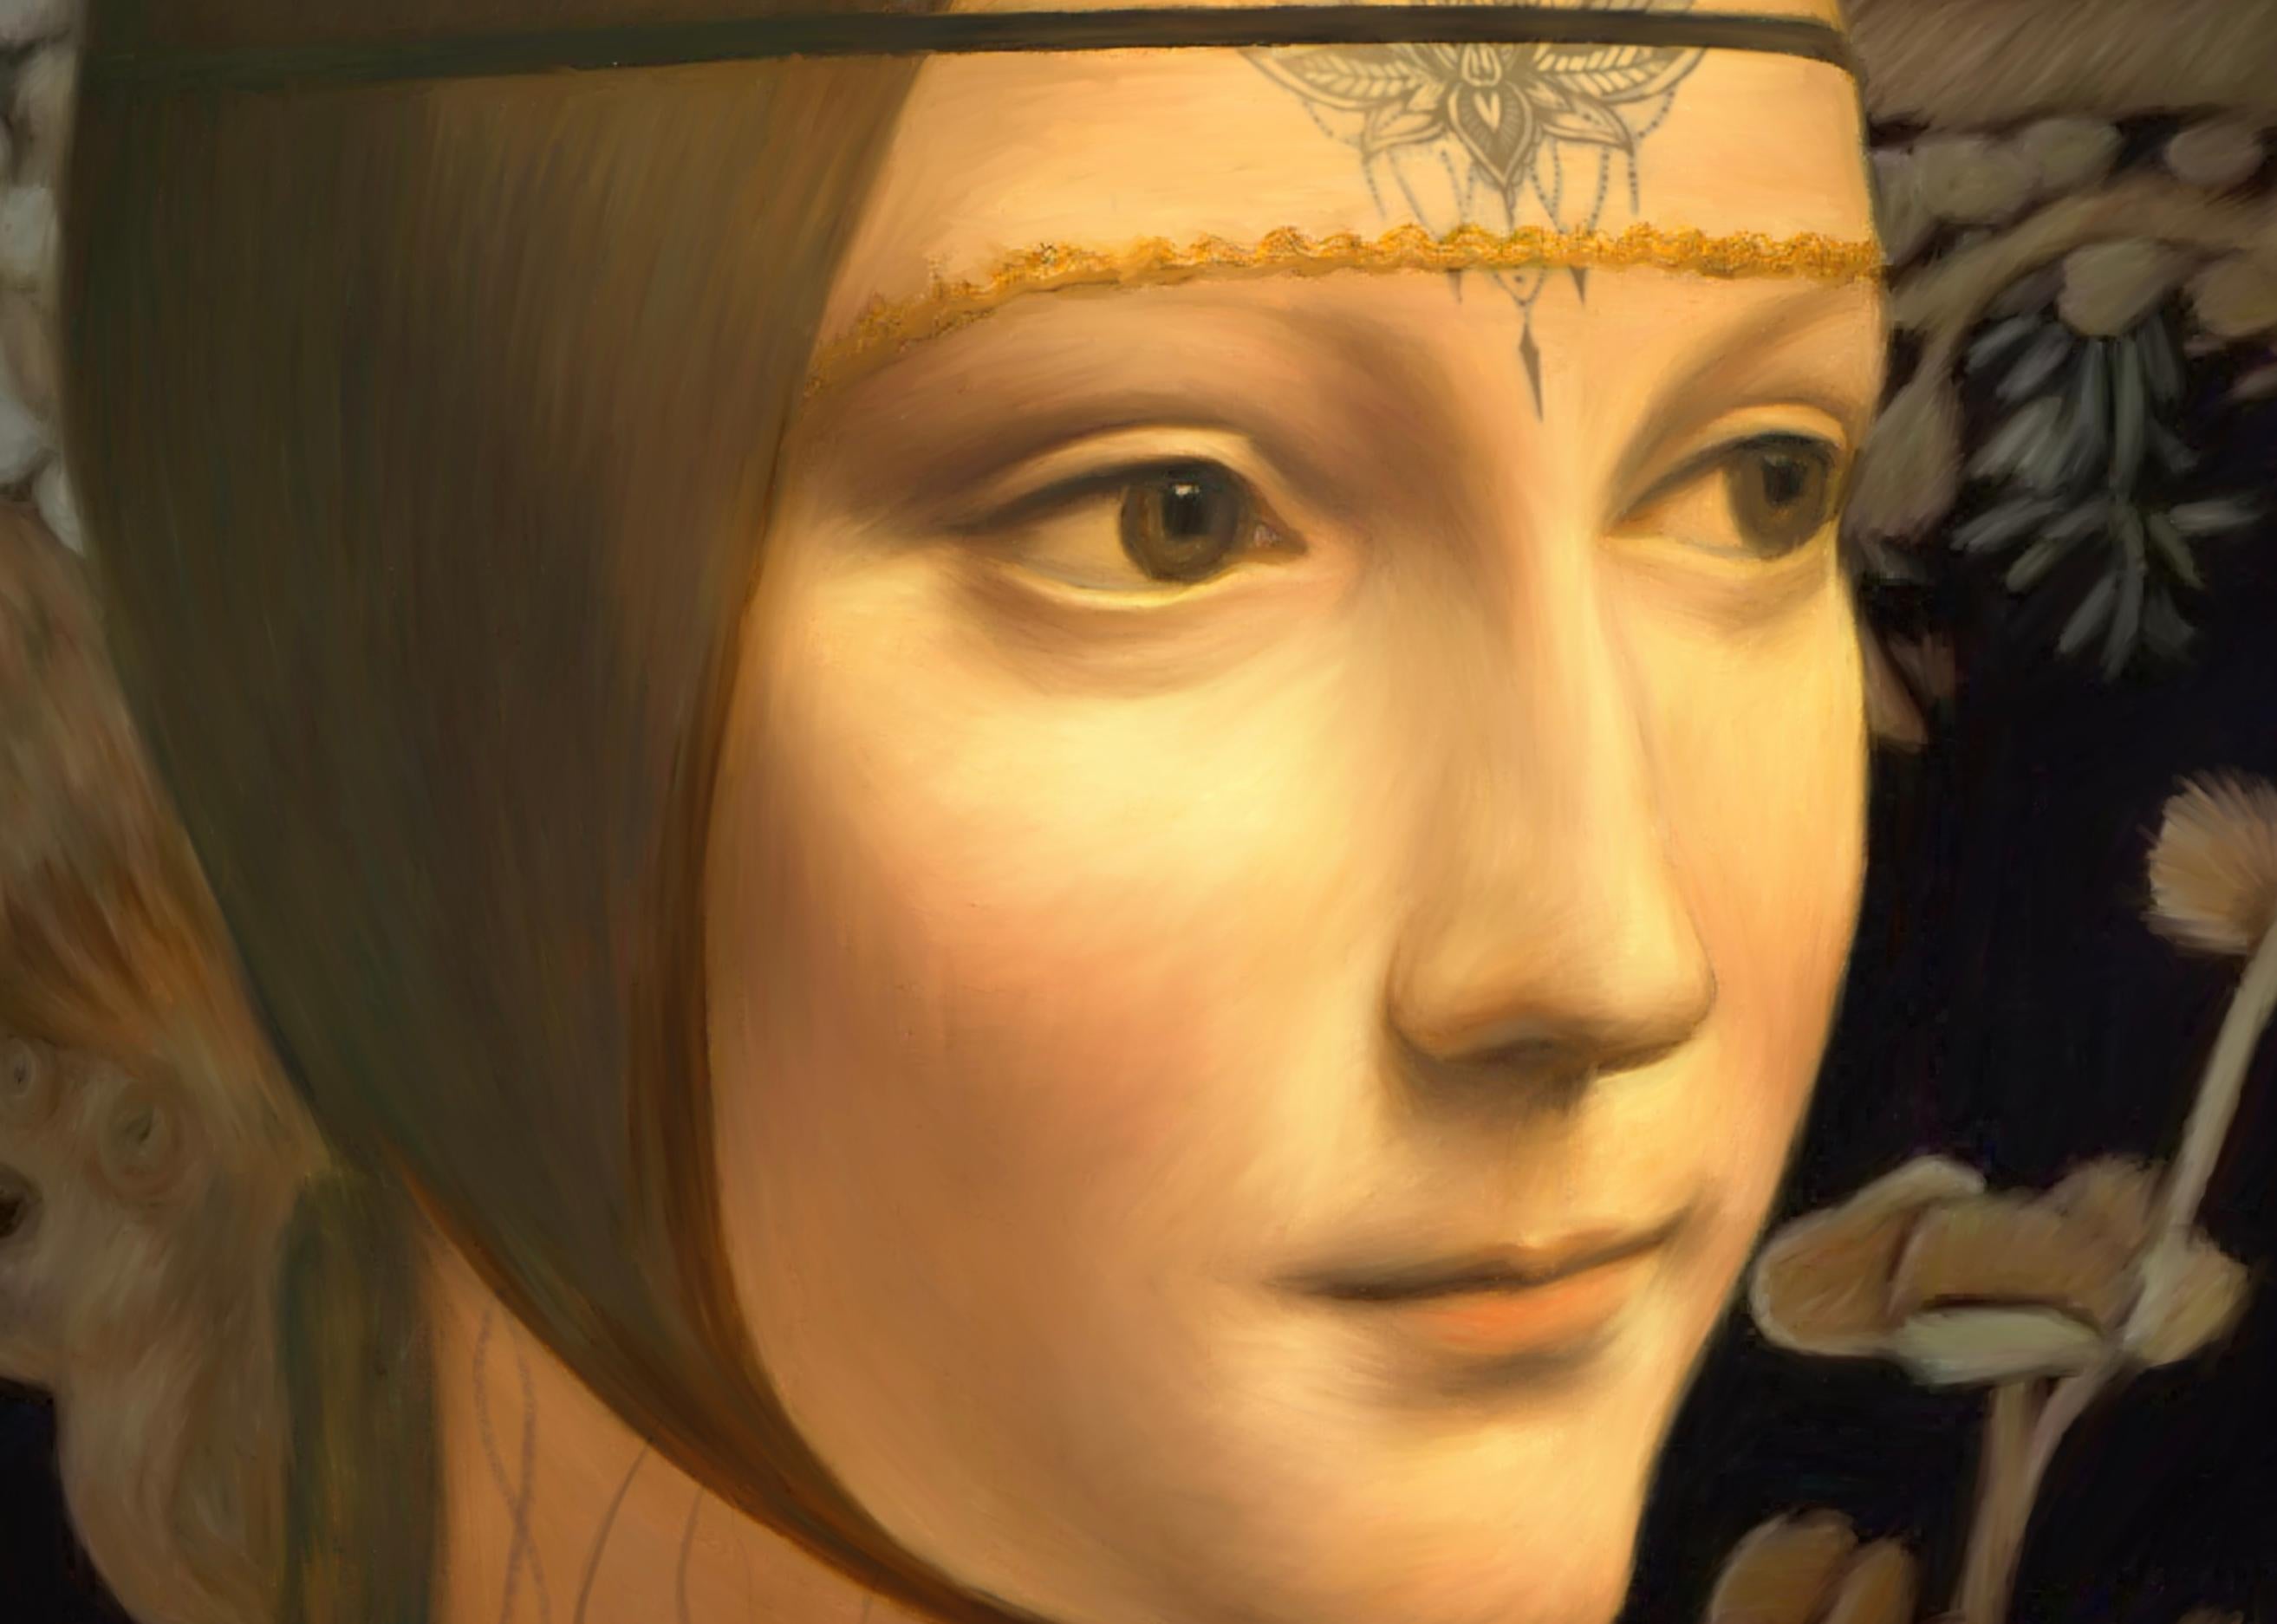 The Ink Lady. Based on the portrait Lady with an ermine, by Leonardo da Vinci. - Print by Pablo de Pinini